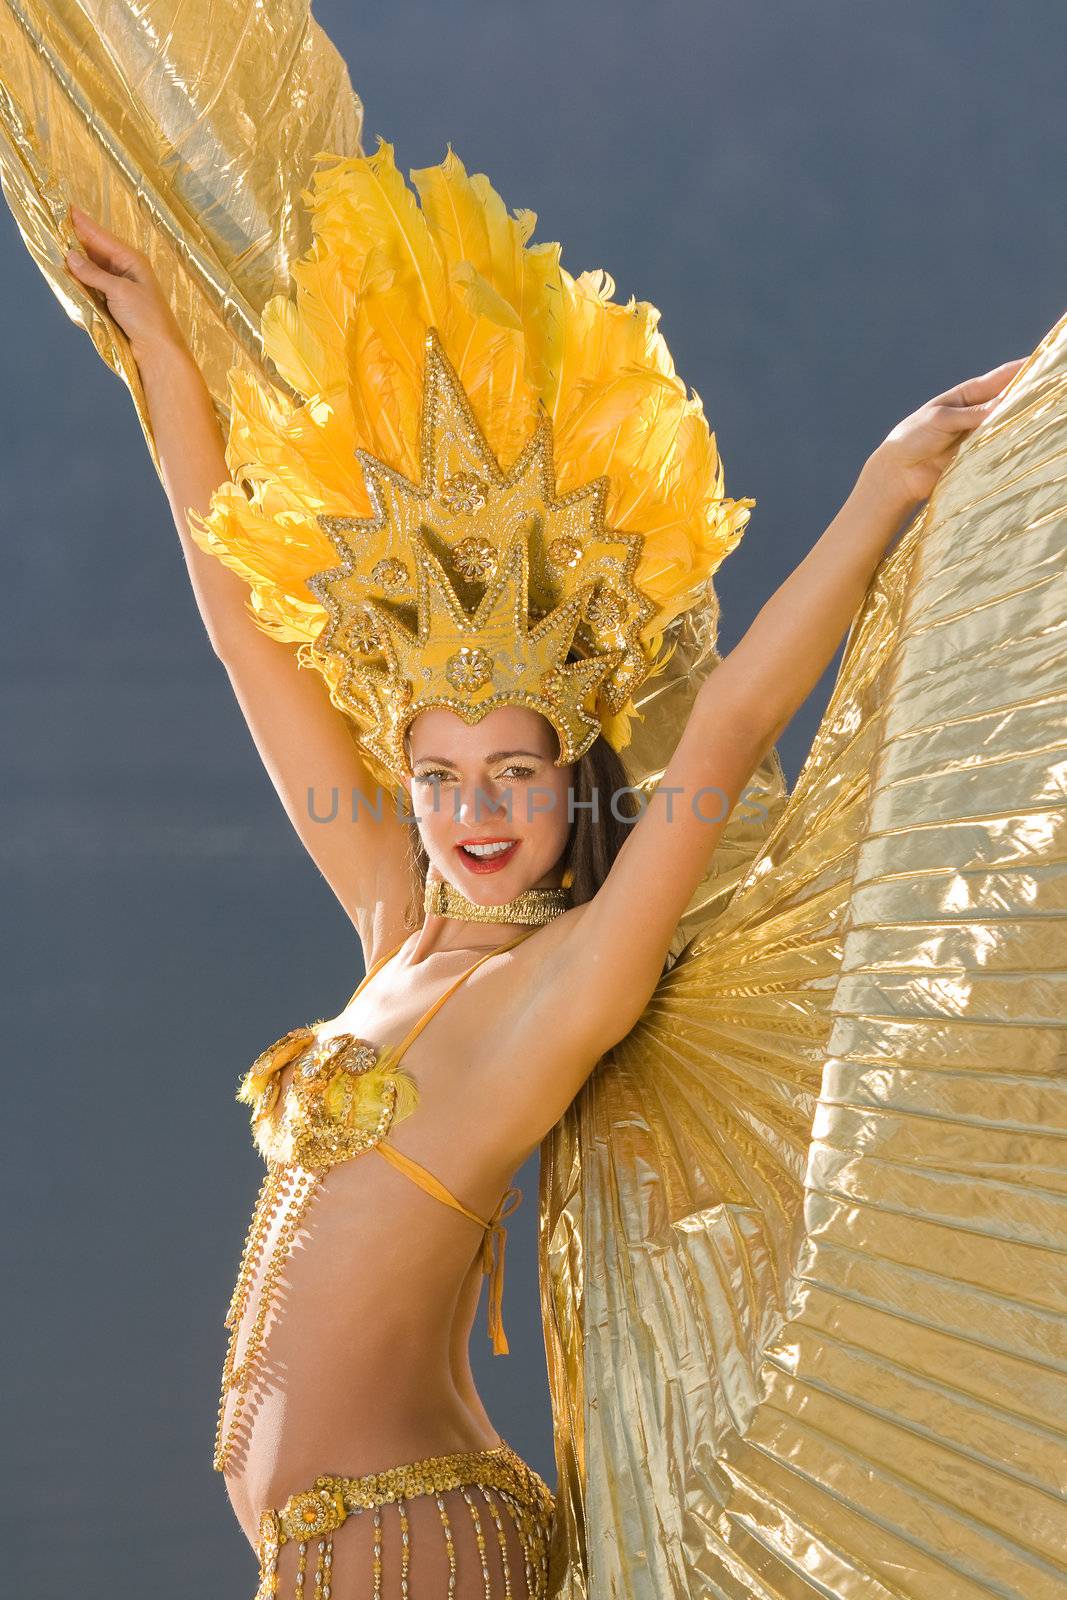 Young girl in a very elaborate costume Samba